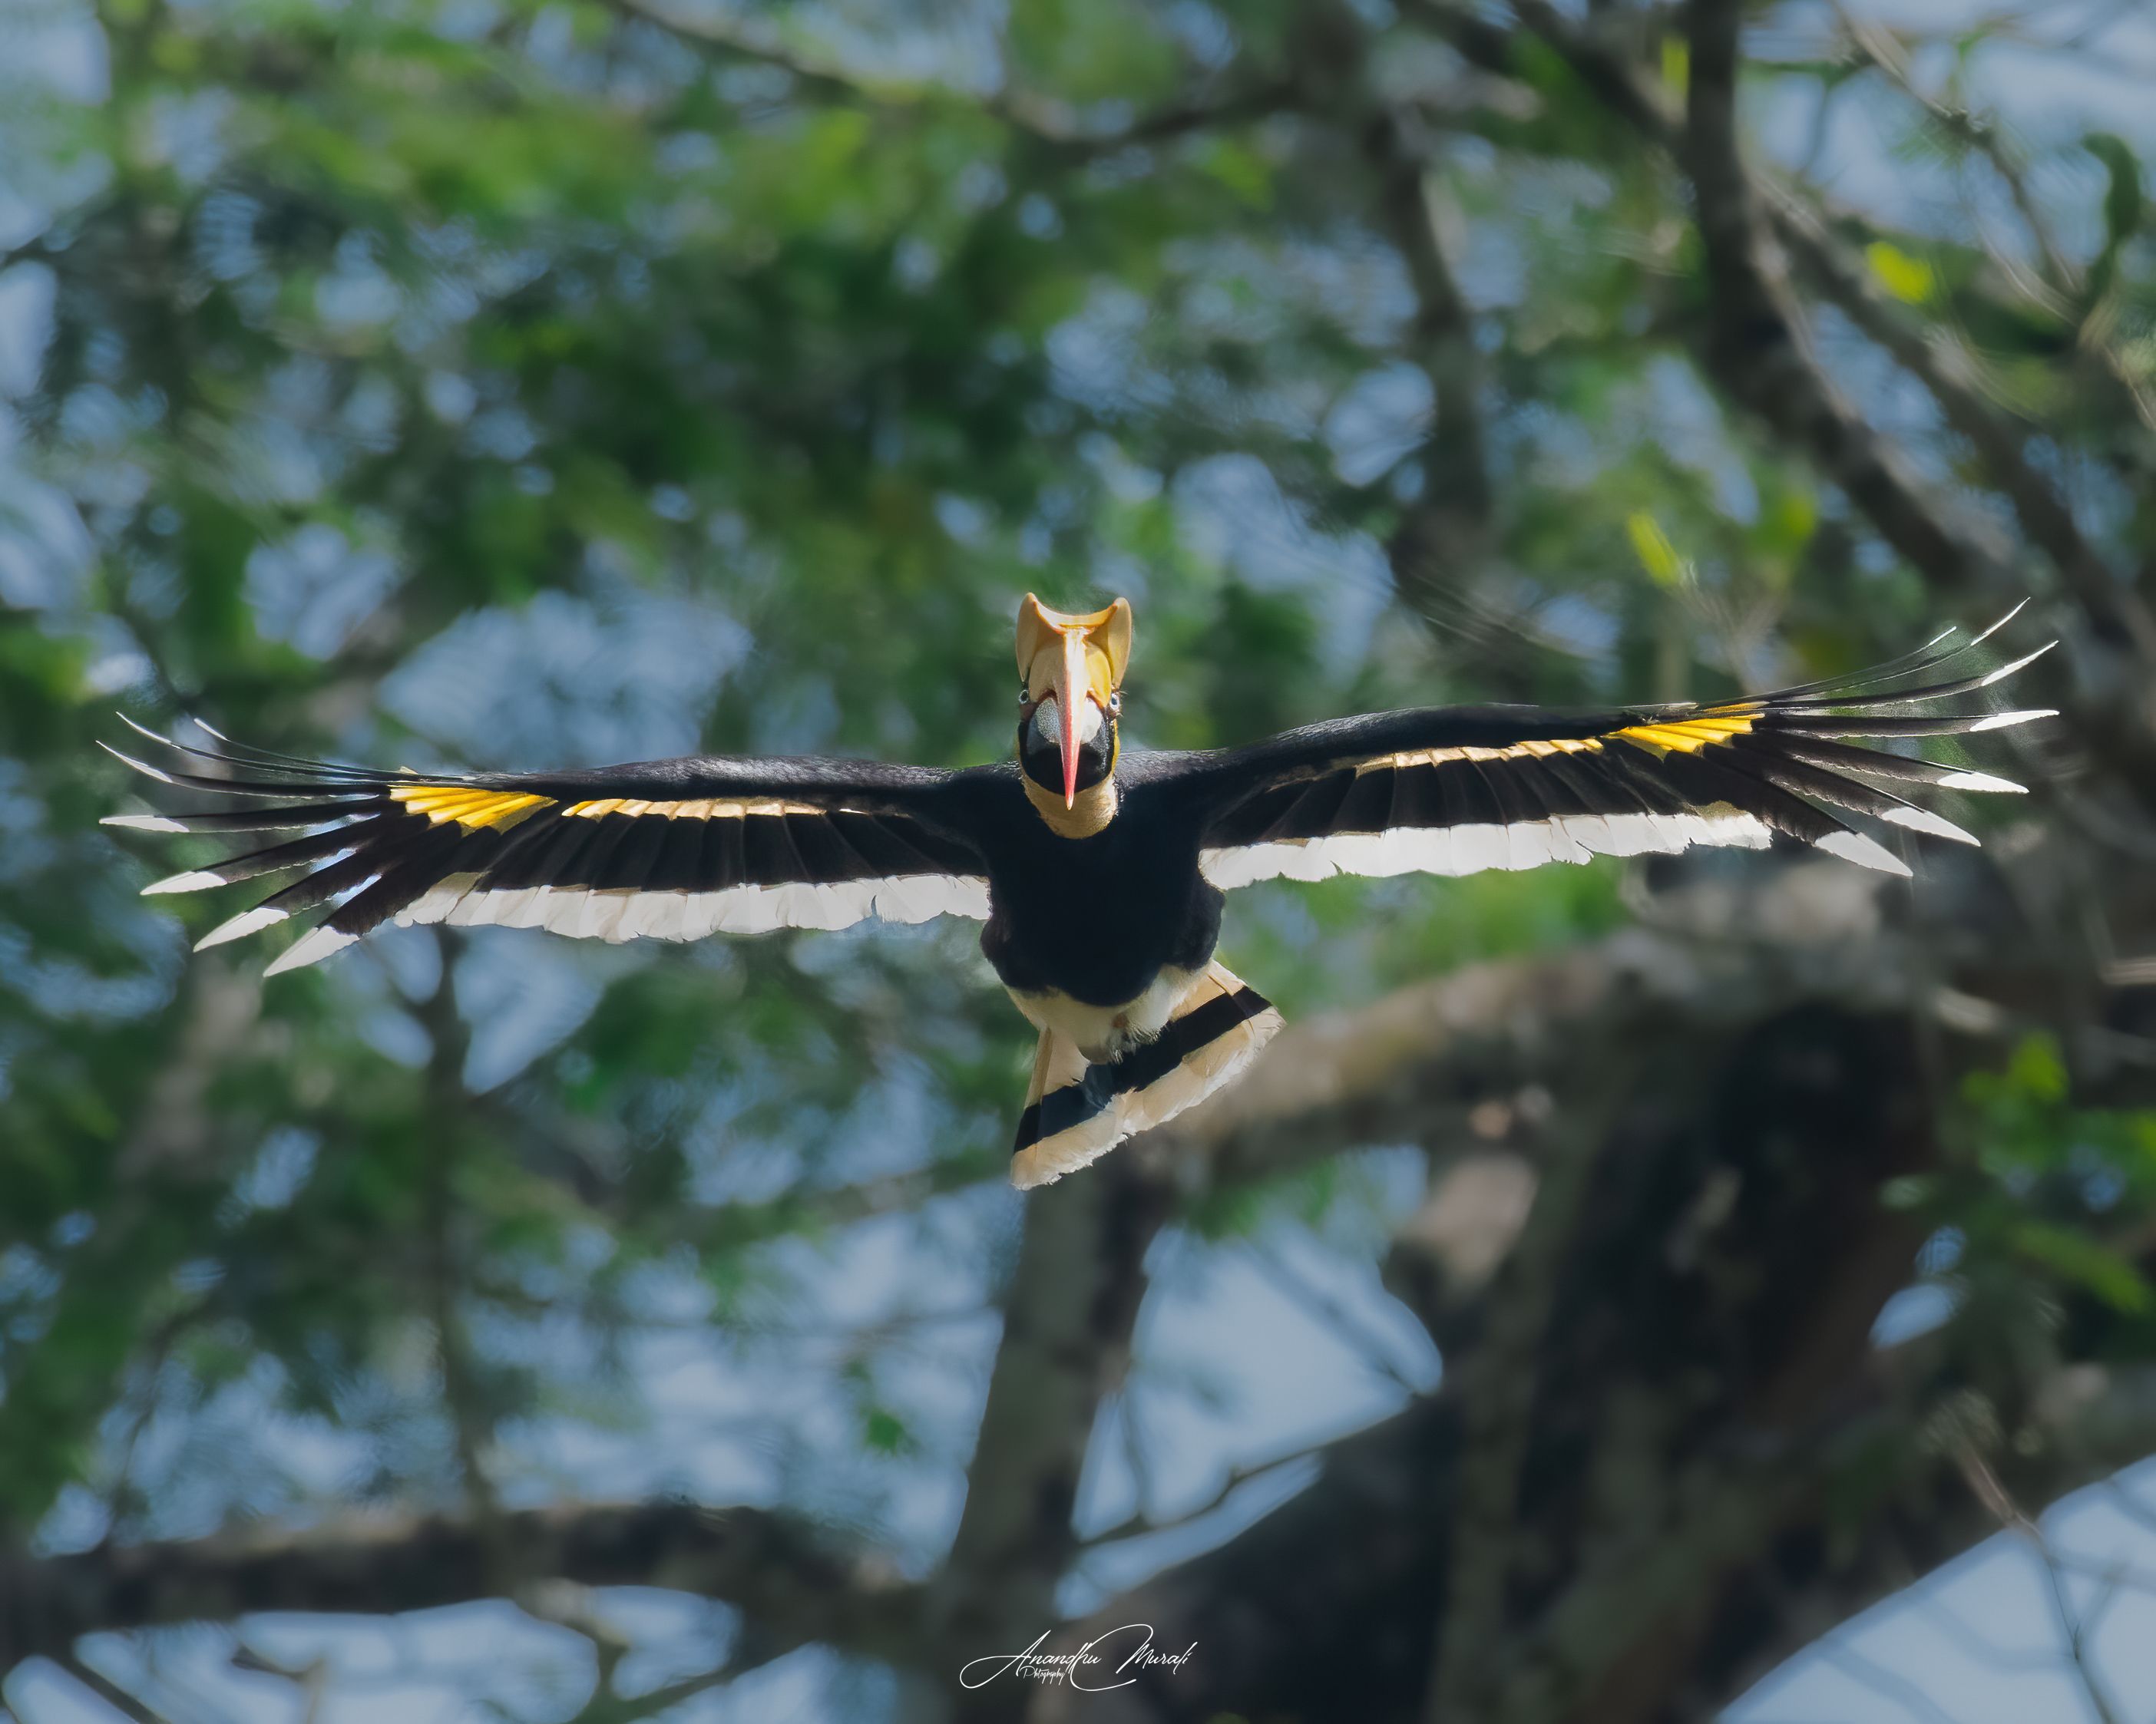 kerala wildlife hornbill india birds, Anandhu M